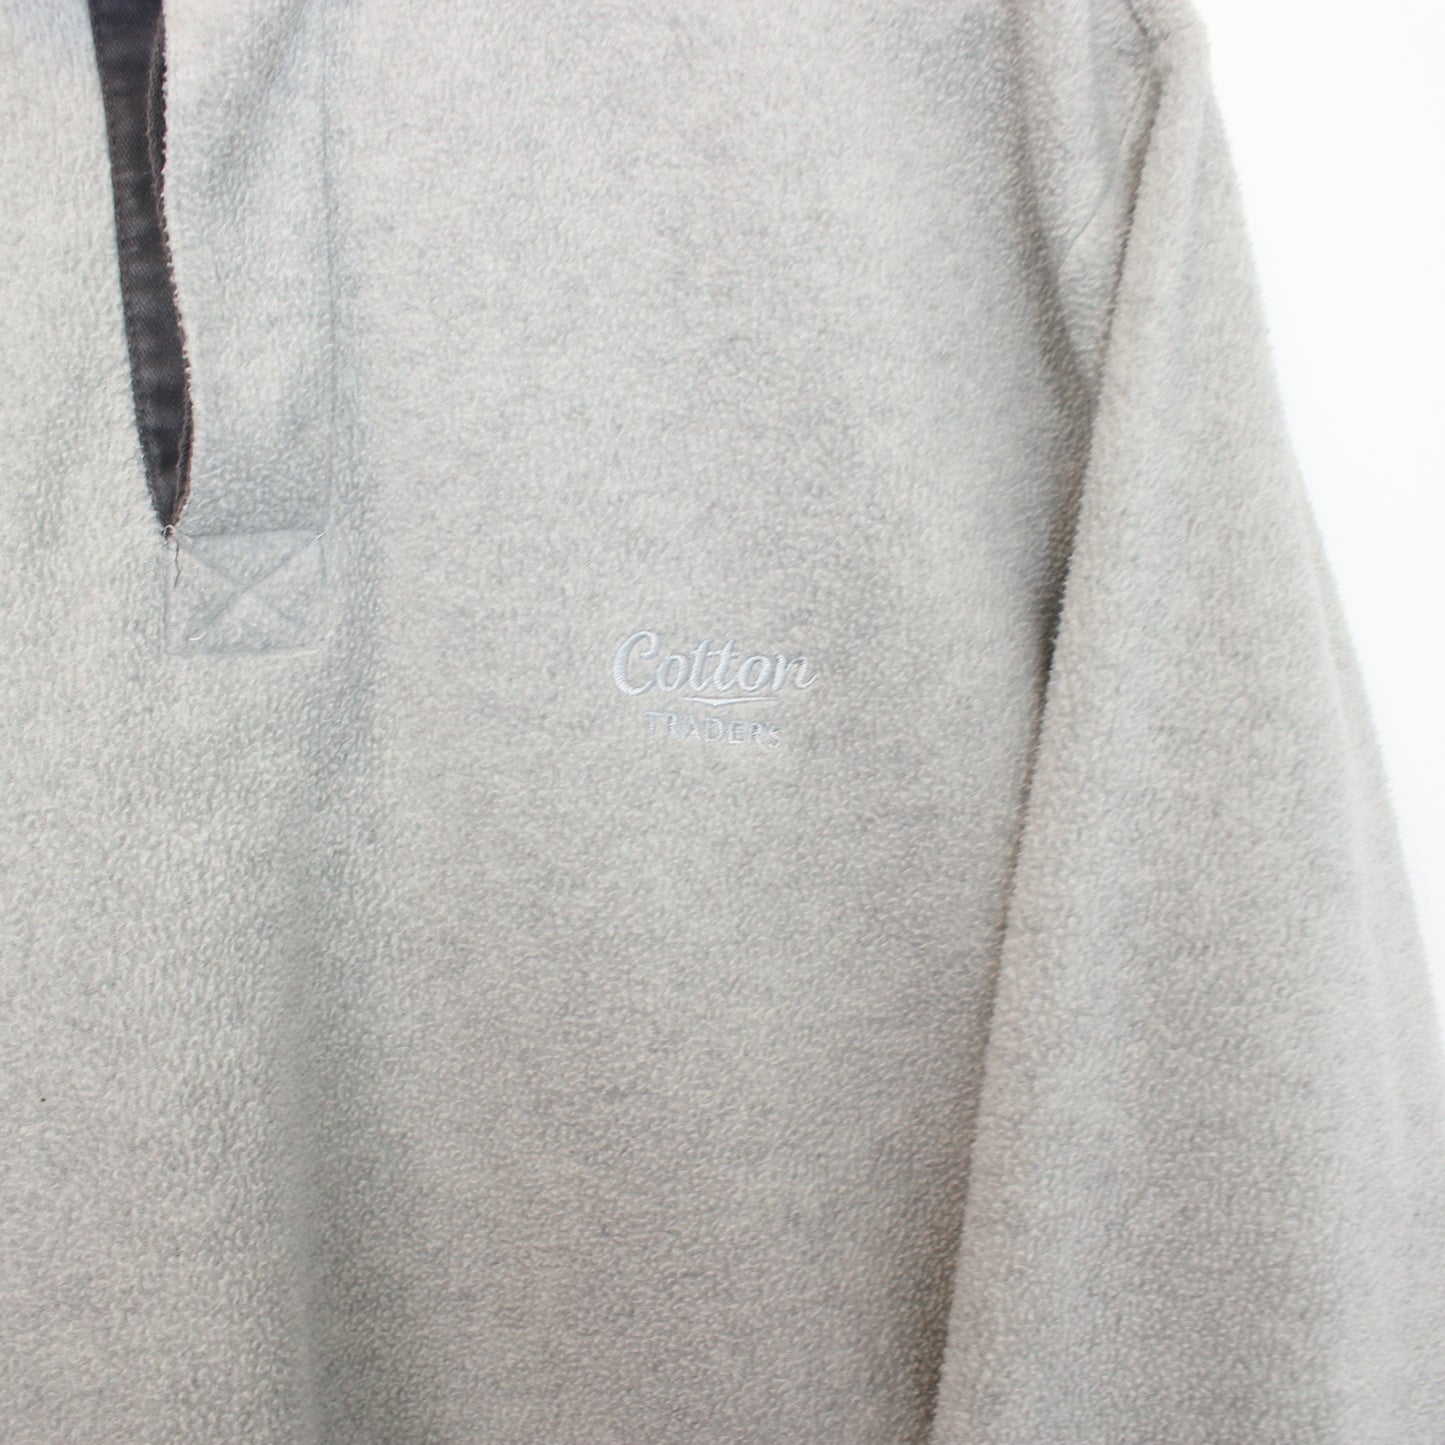 Vintage Cotton Traders fleece in grey. Best fits L